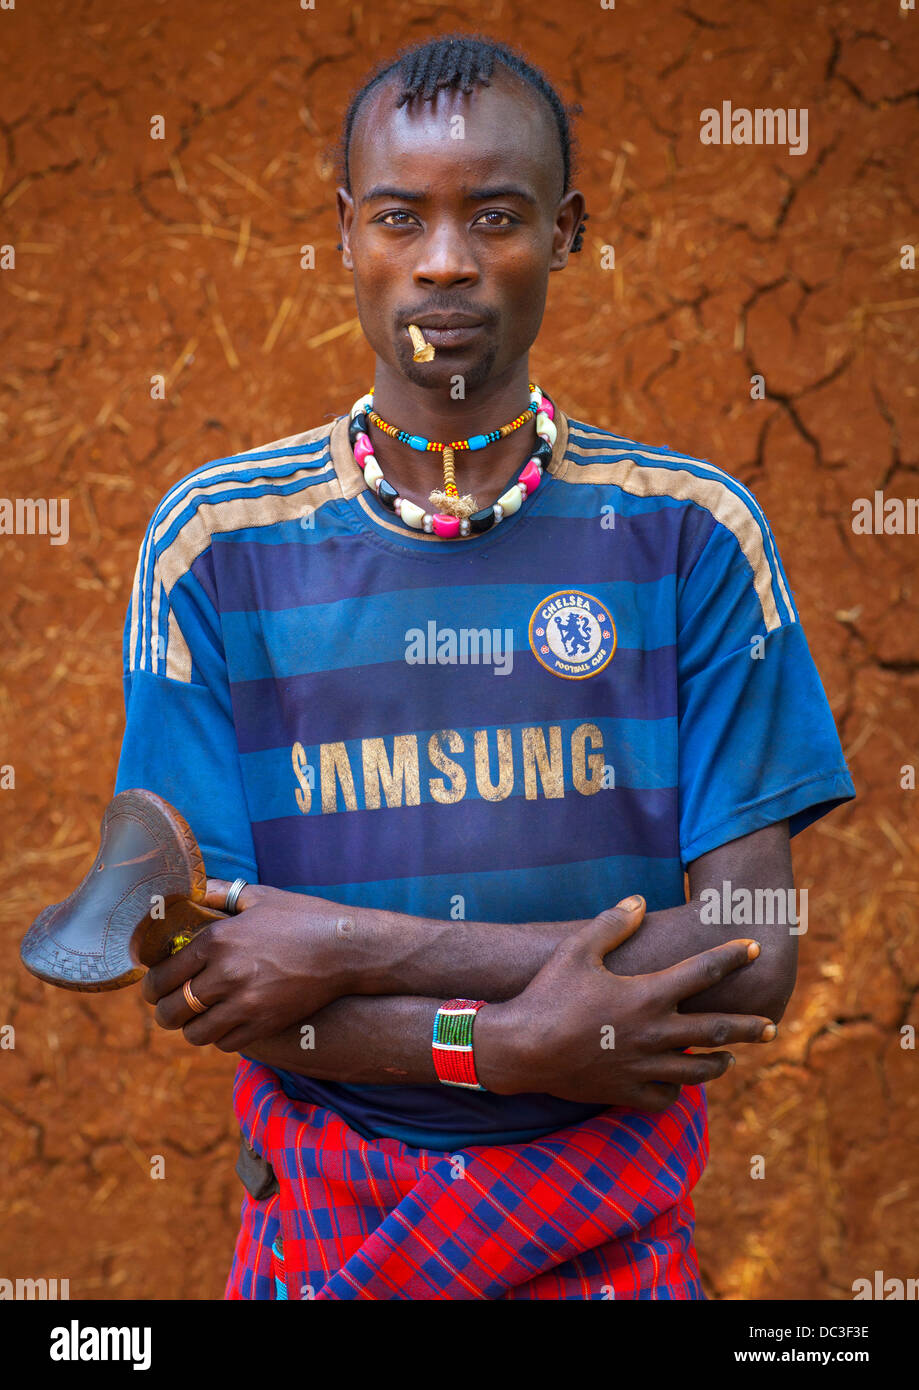 Hamer Tribe Uomo con un Chelsea Football Shirt, Turmi, Valle dell'Omo, Etiopia Foto Stock